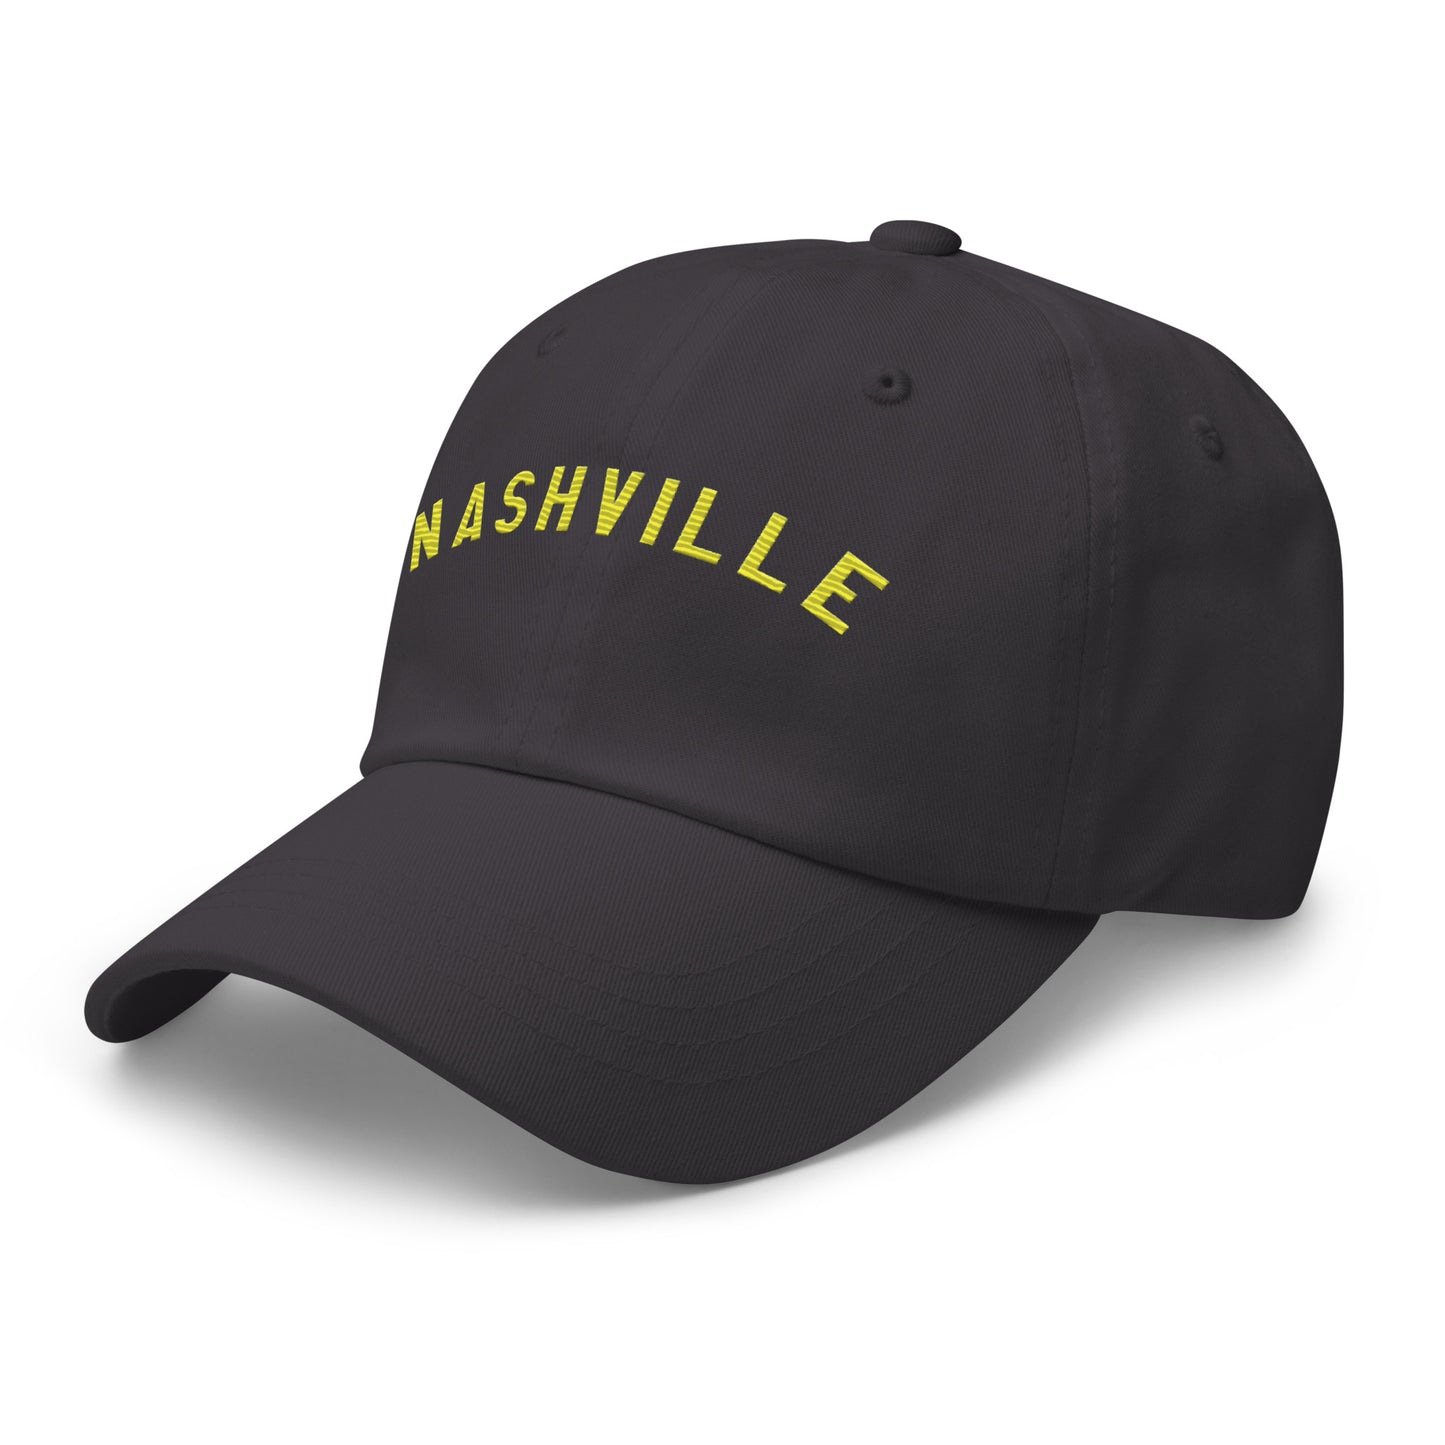 Nashville Curved text Dad hat